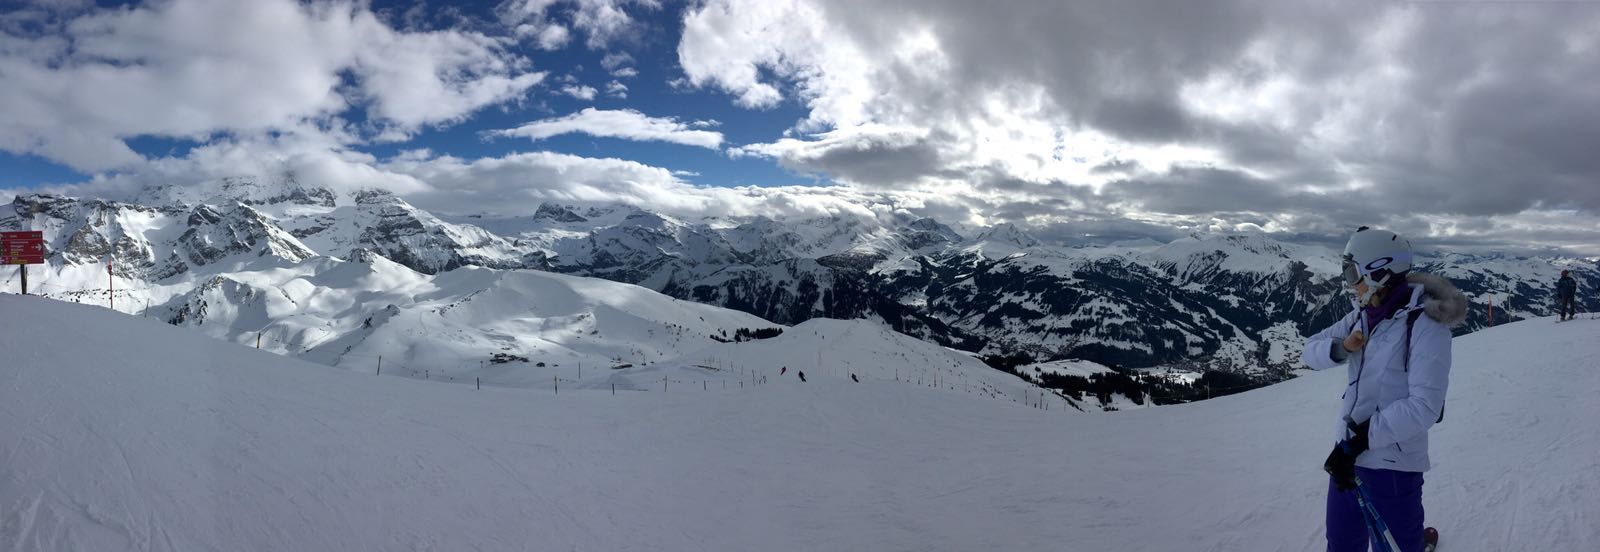 Chloe skiing in the Adelboden/Lenk region